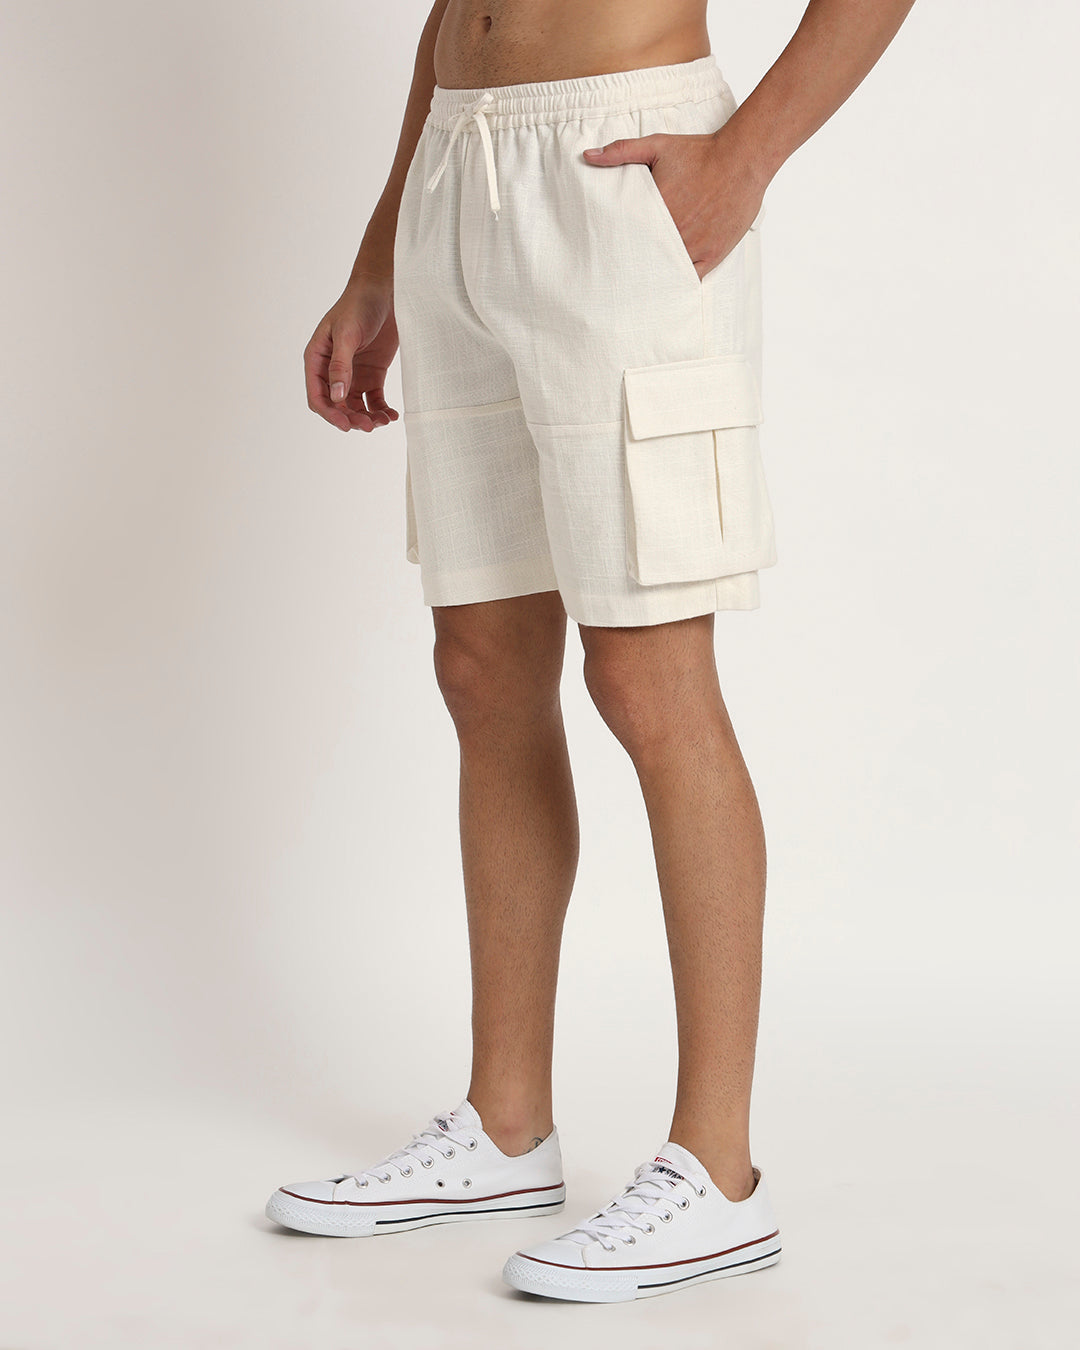 Combo : Comfy Ease & Cargo White Men's Pants & Shorts  - Set of 2